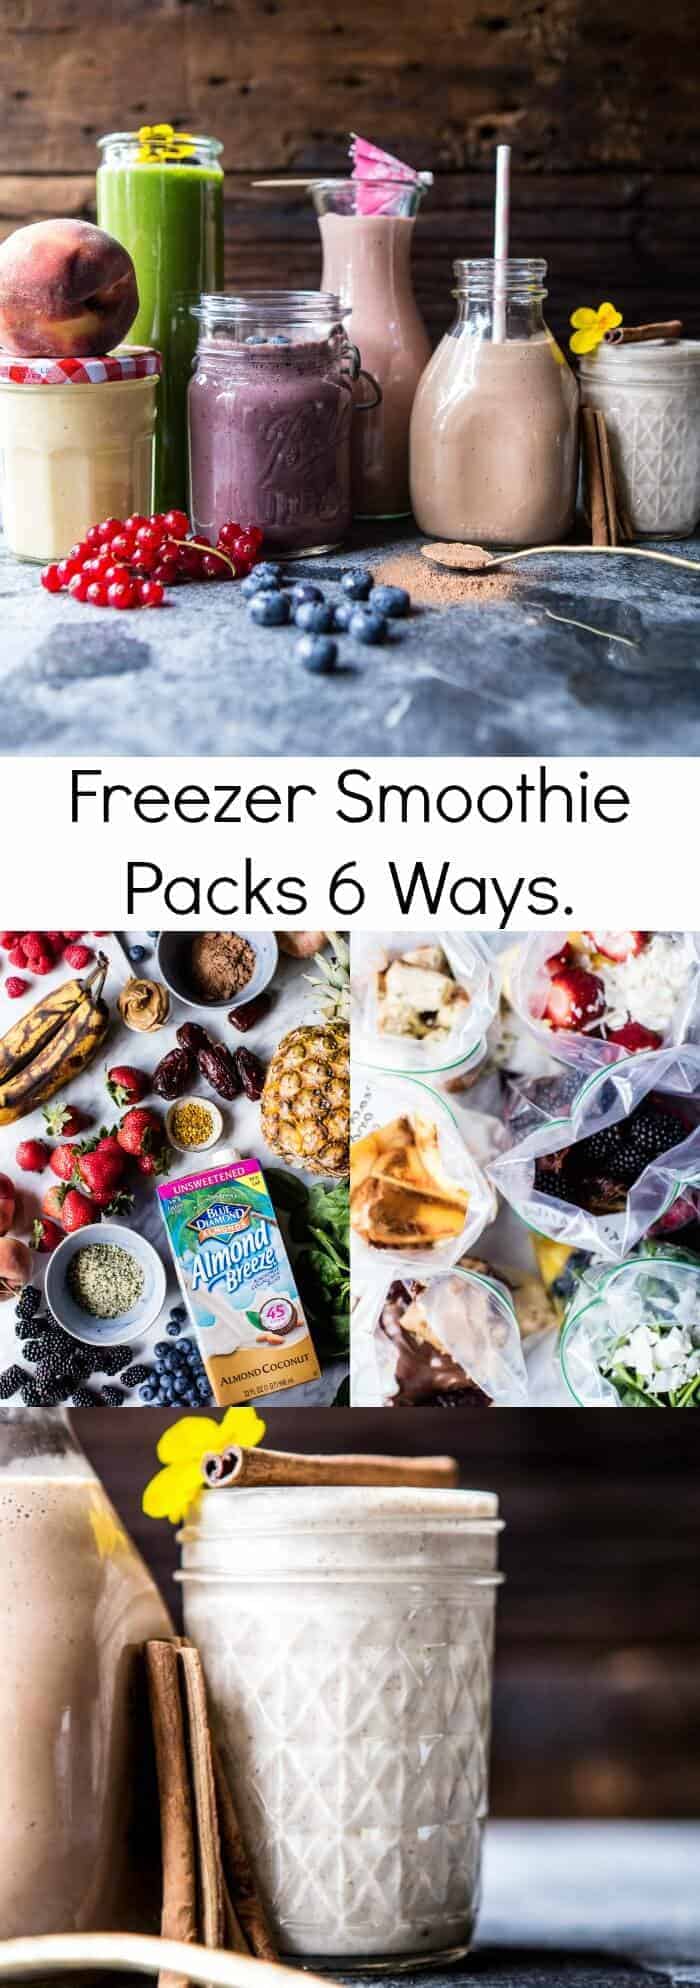 Freezer Smoothie Packs 6 Ways | halfbakedharvest.com @hbharvest